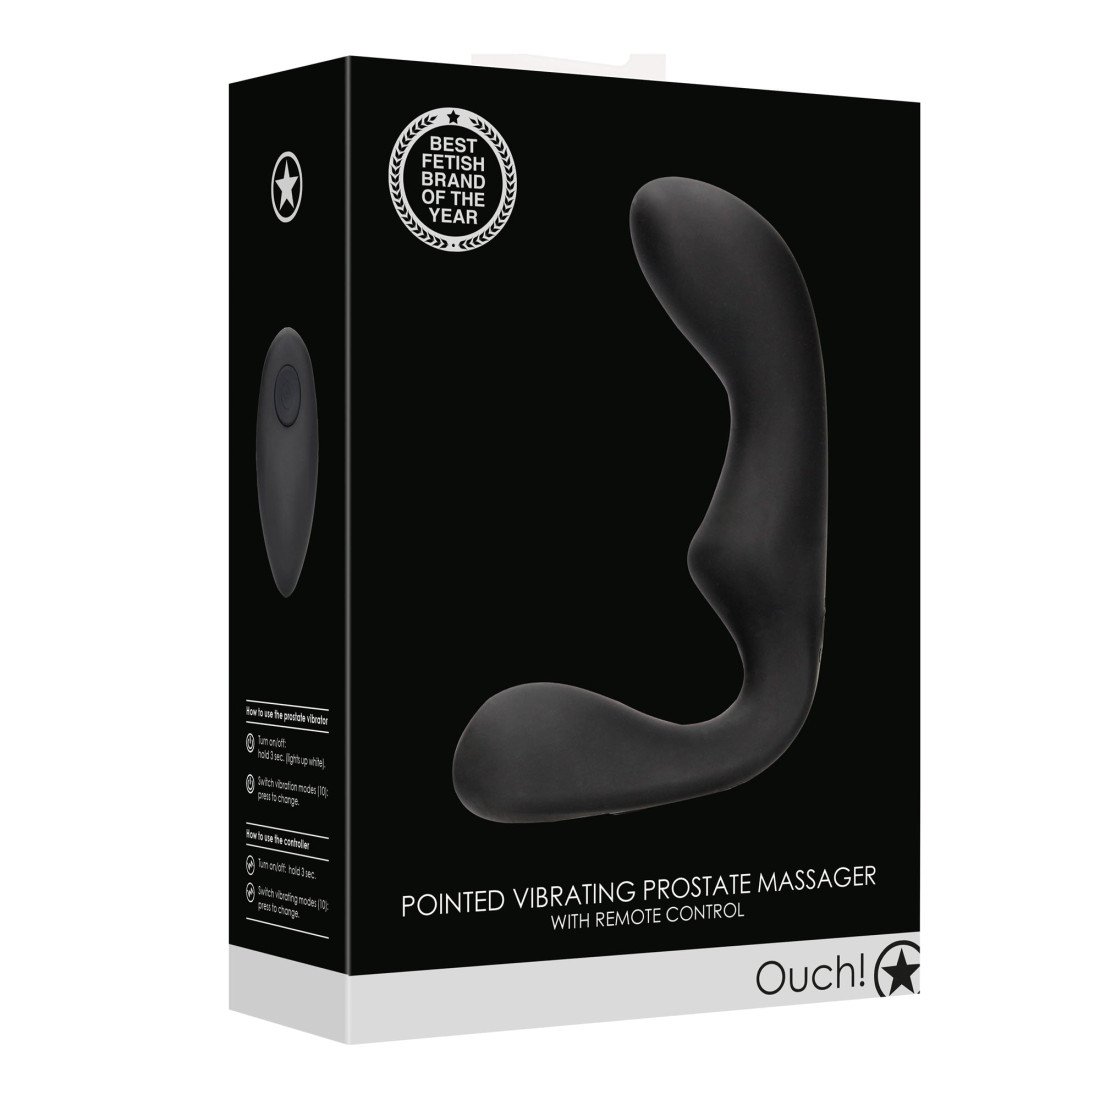 Vibruojantis prostatos masažuoklis „Pointed Vibrating Prostate Massager“ - Ouch!